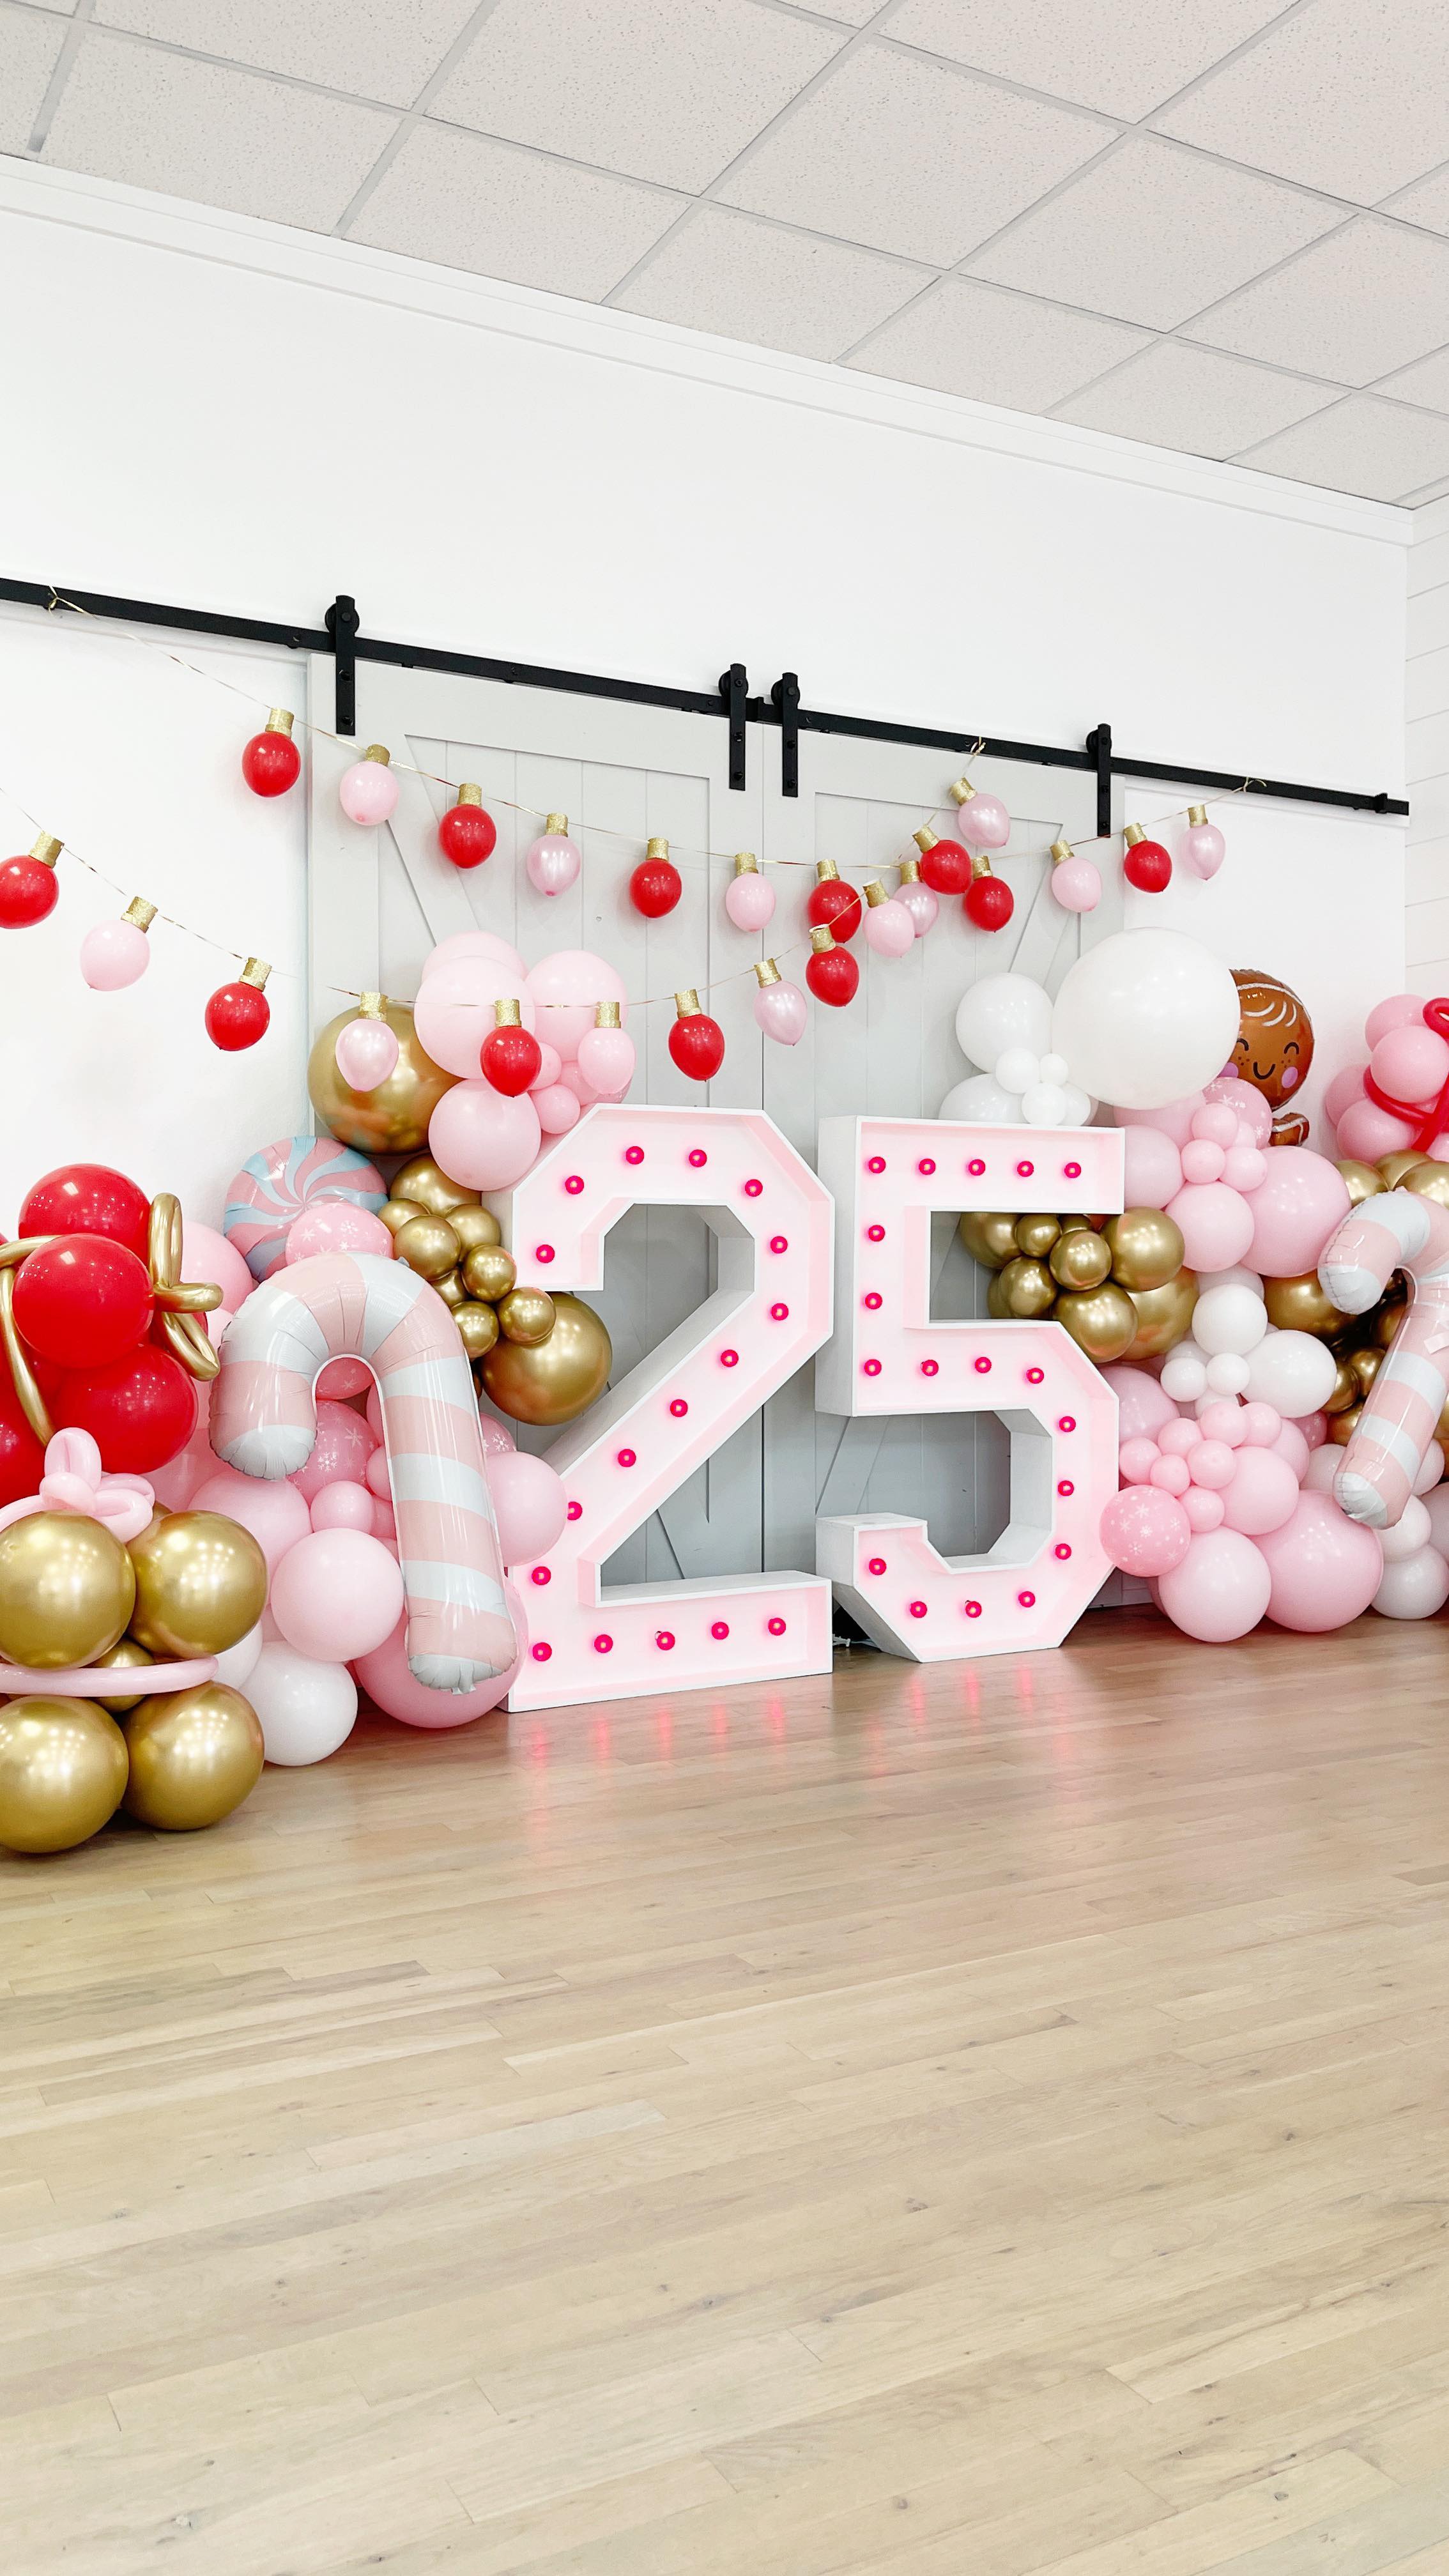 #tbt #christmasballoons #shortvideo #reel #christmasdecor #christmas #ballooninstallation #balloonreel #merrychristmas